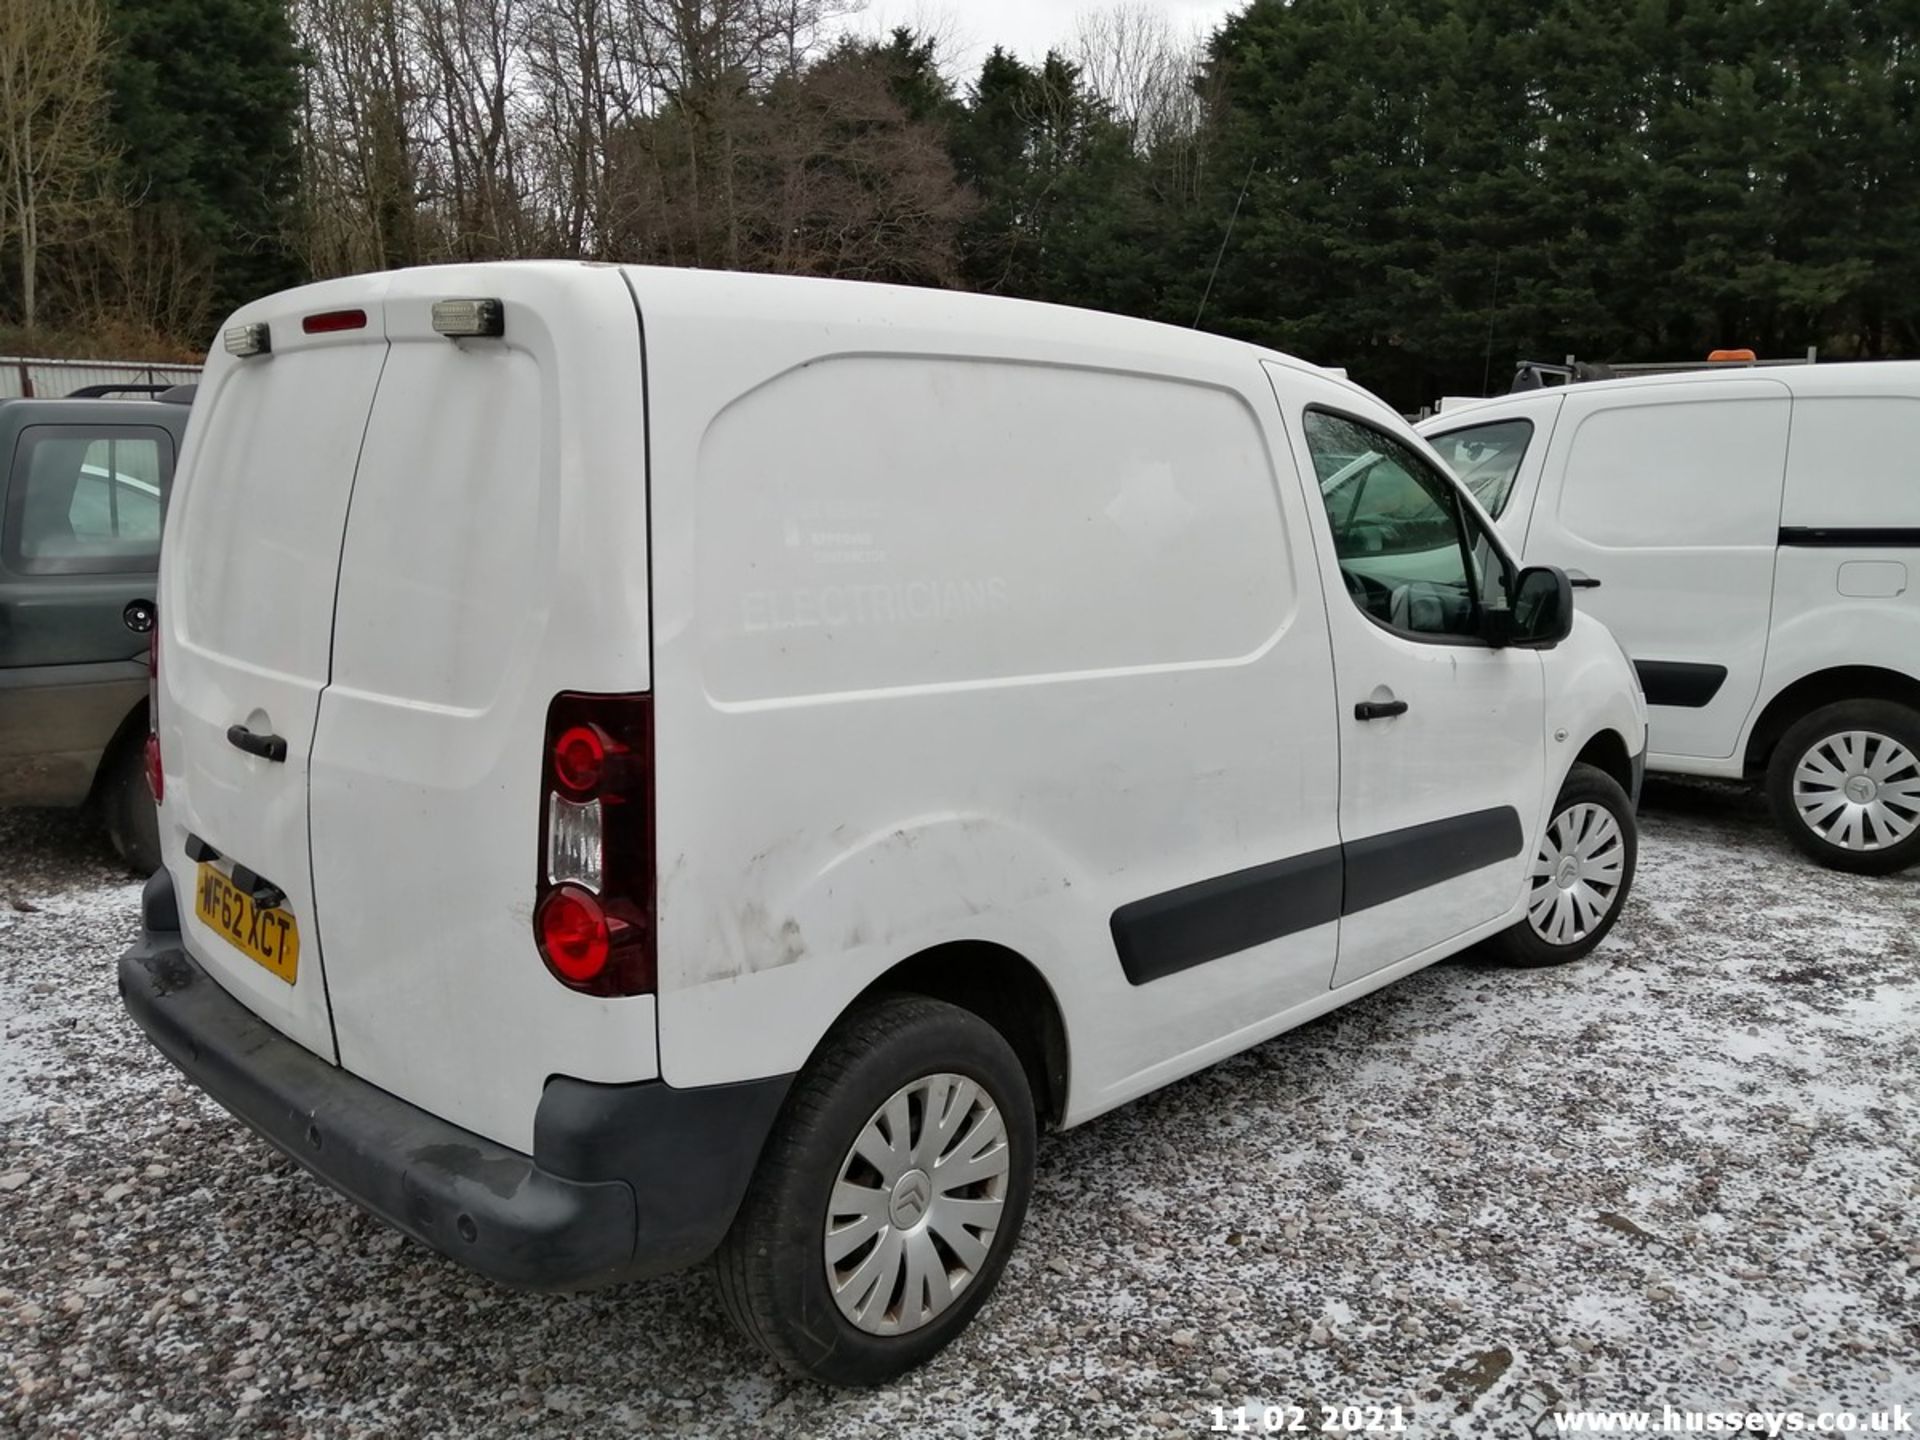 12/62 CITROEN BERLINGO 850 LX HDI - 1560cc 5dr Van (White, 25k) - Image 6 of 13